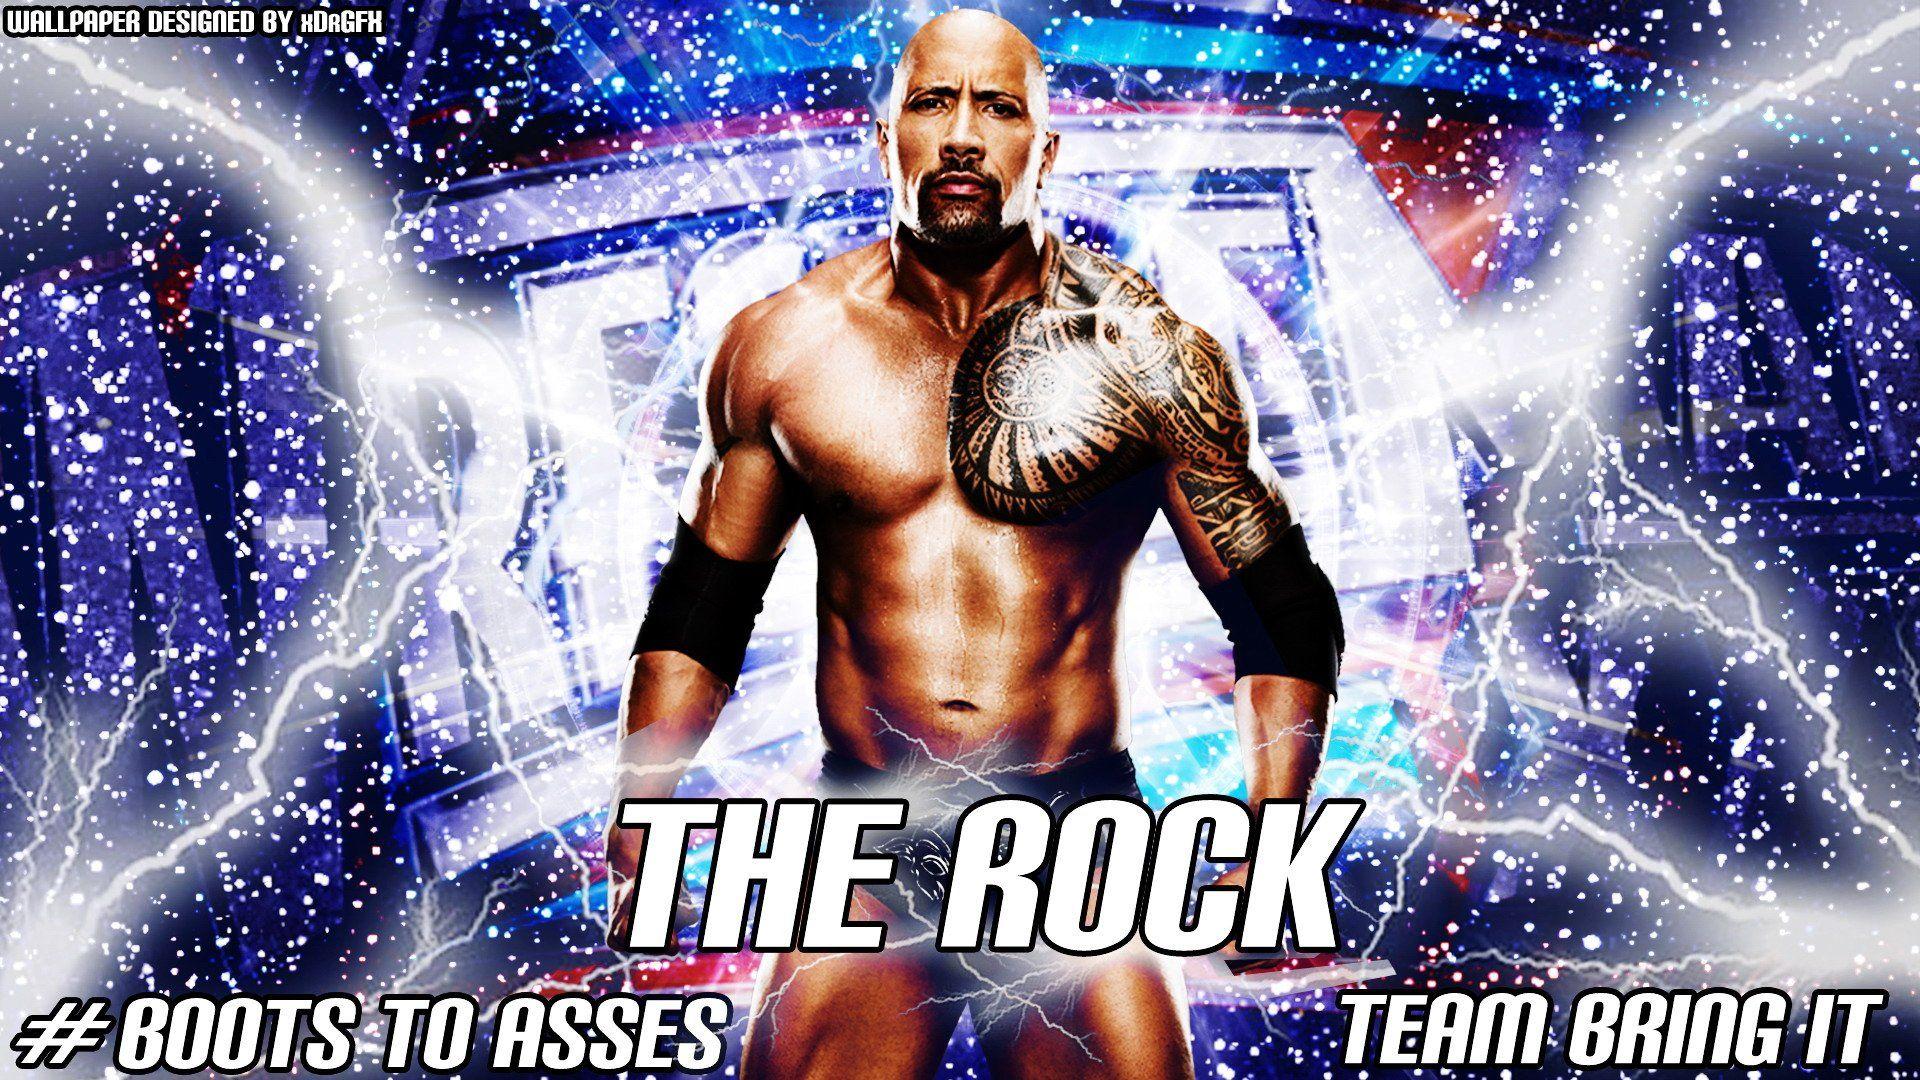 WWE The Rock Desktop Wallpaper. Beautiful image HD Picture